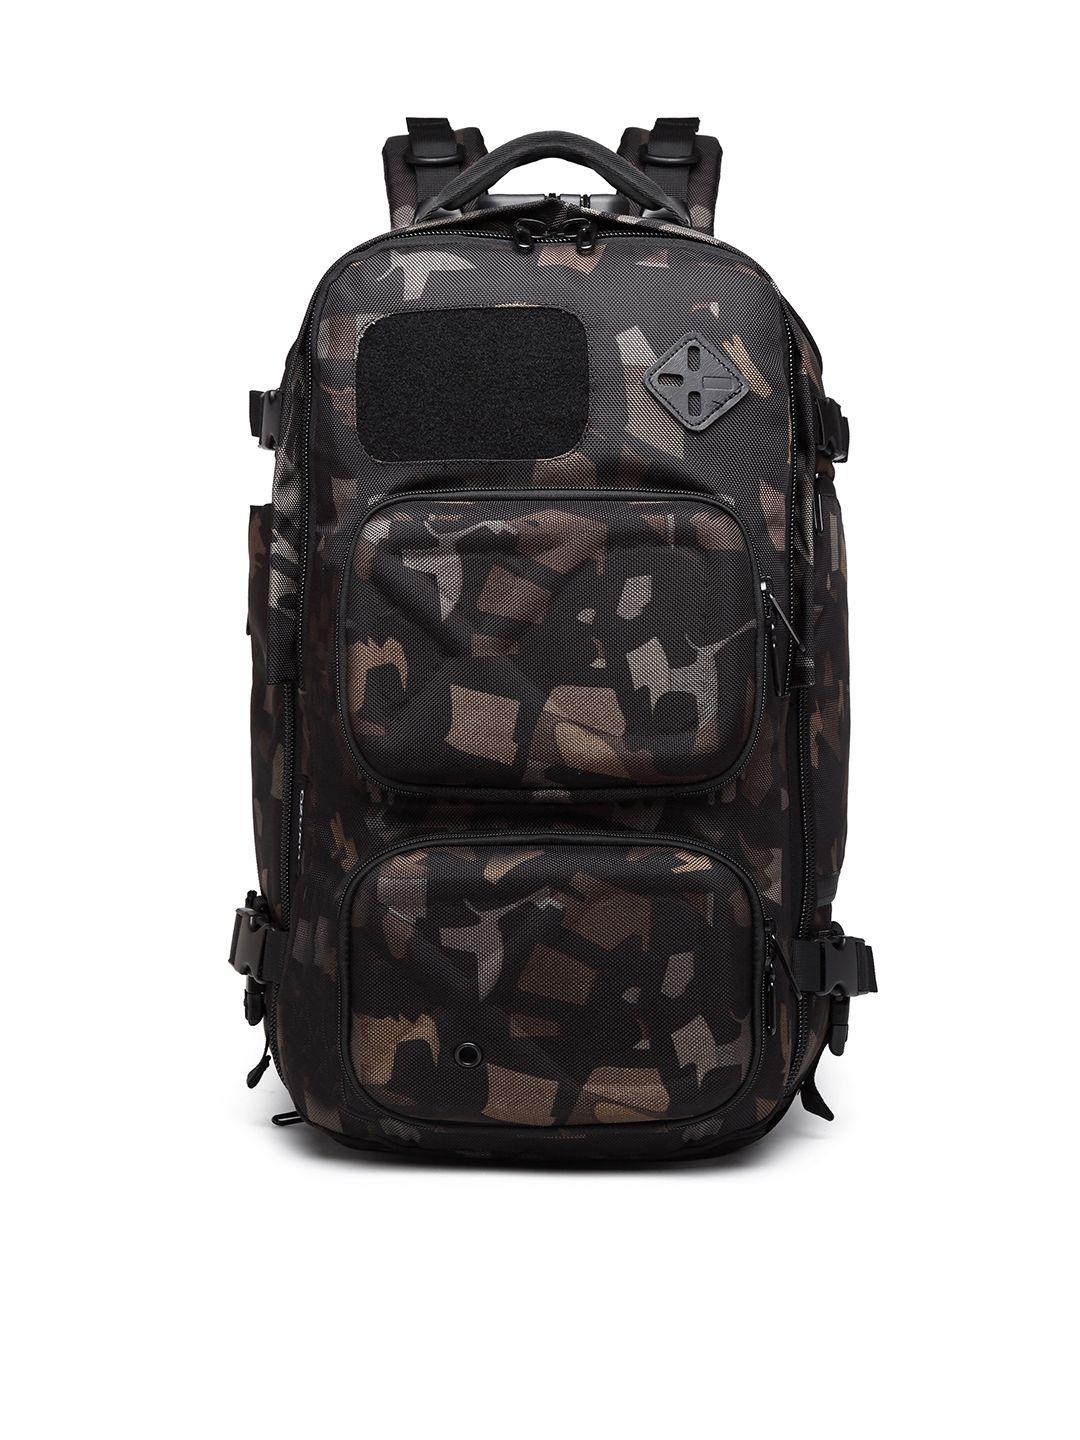 ozuko unisex black & brown camouflage medium soft case backpack